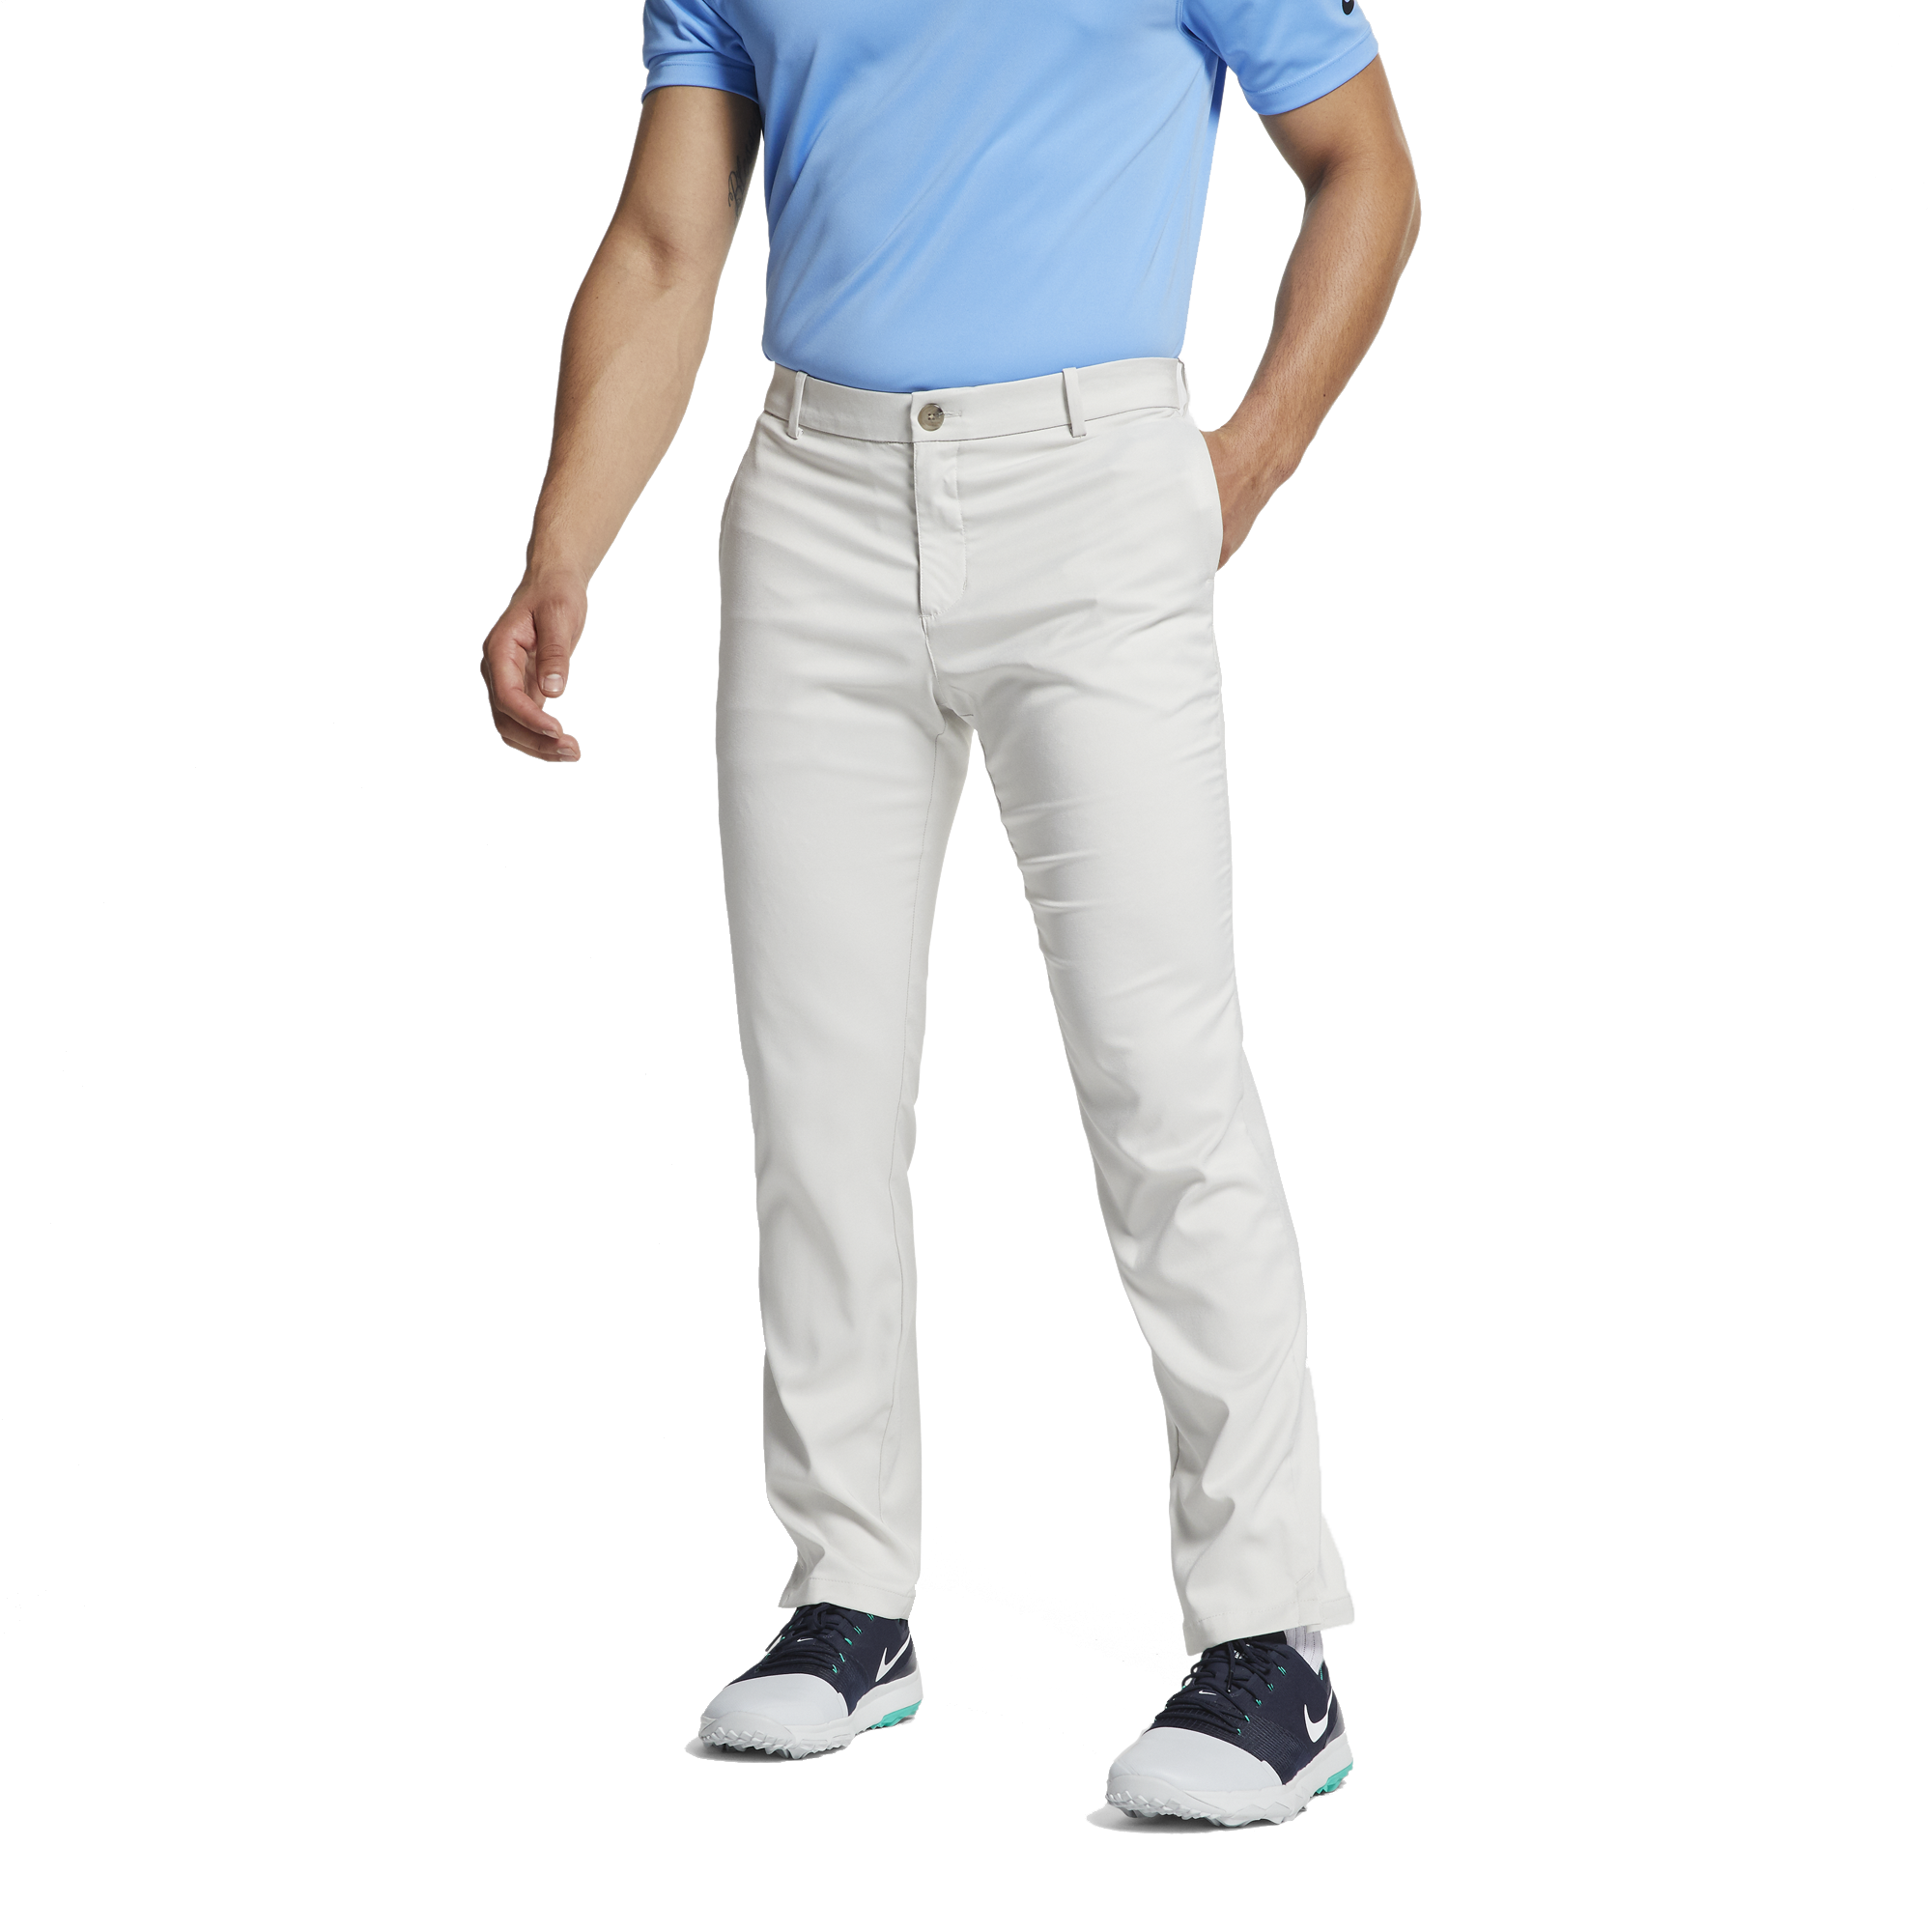 nike men's flex core golf pants